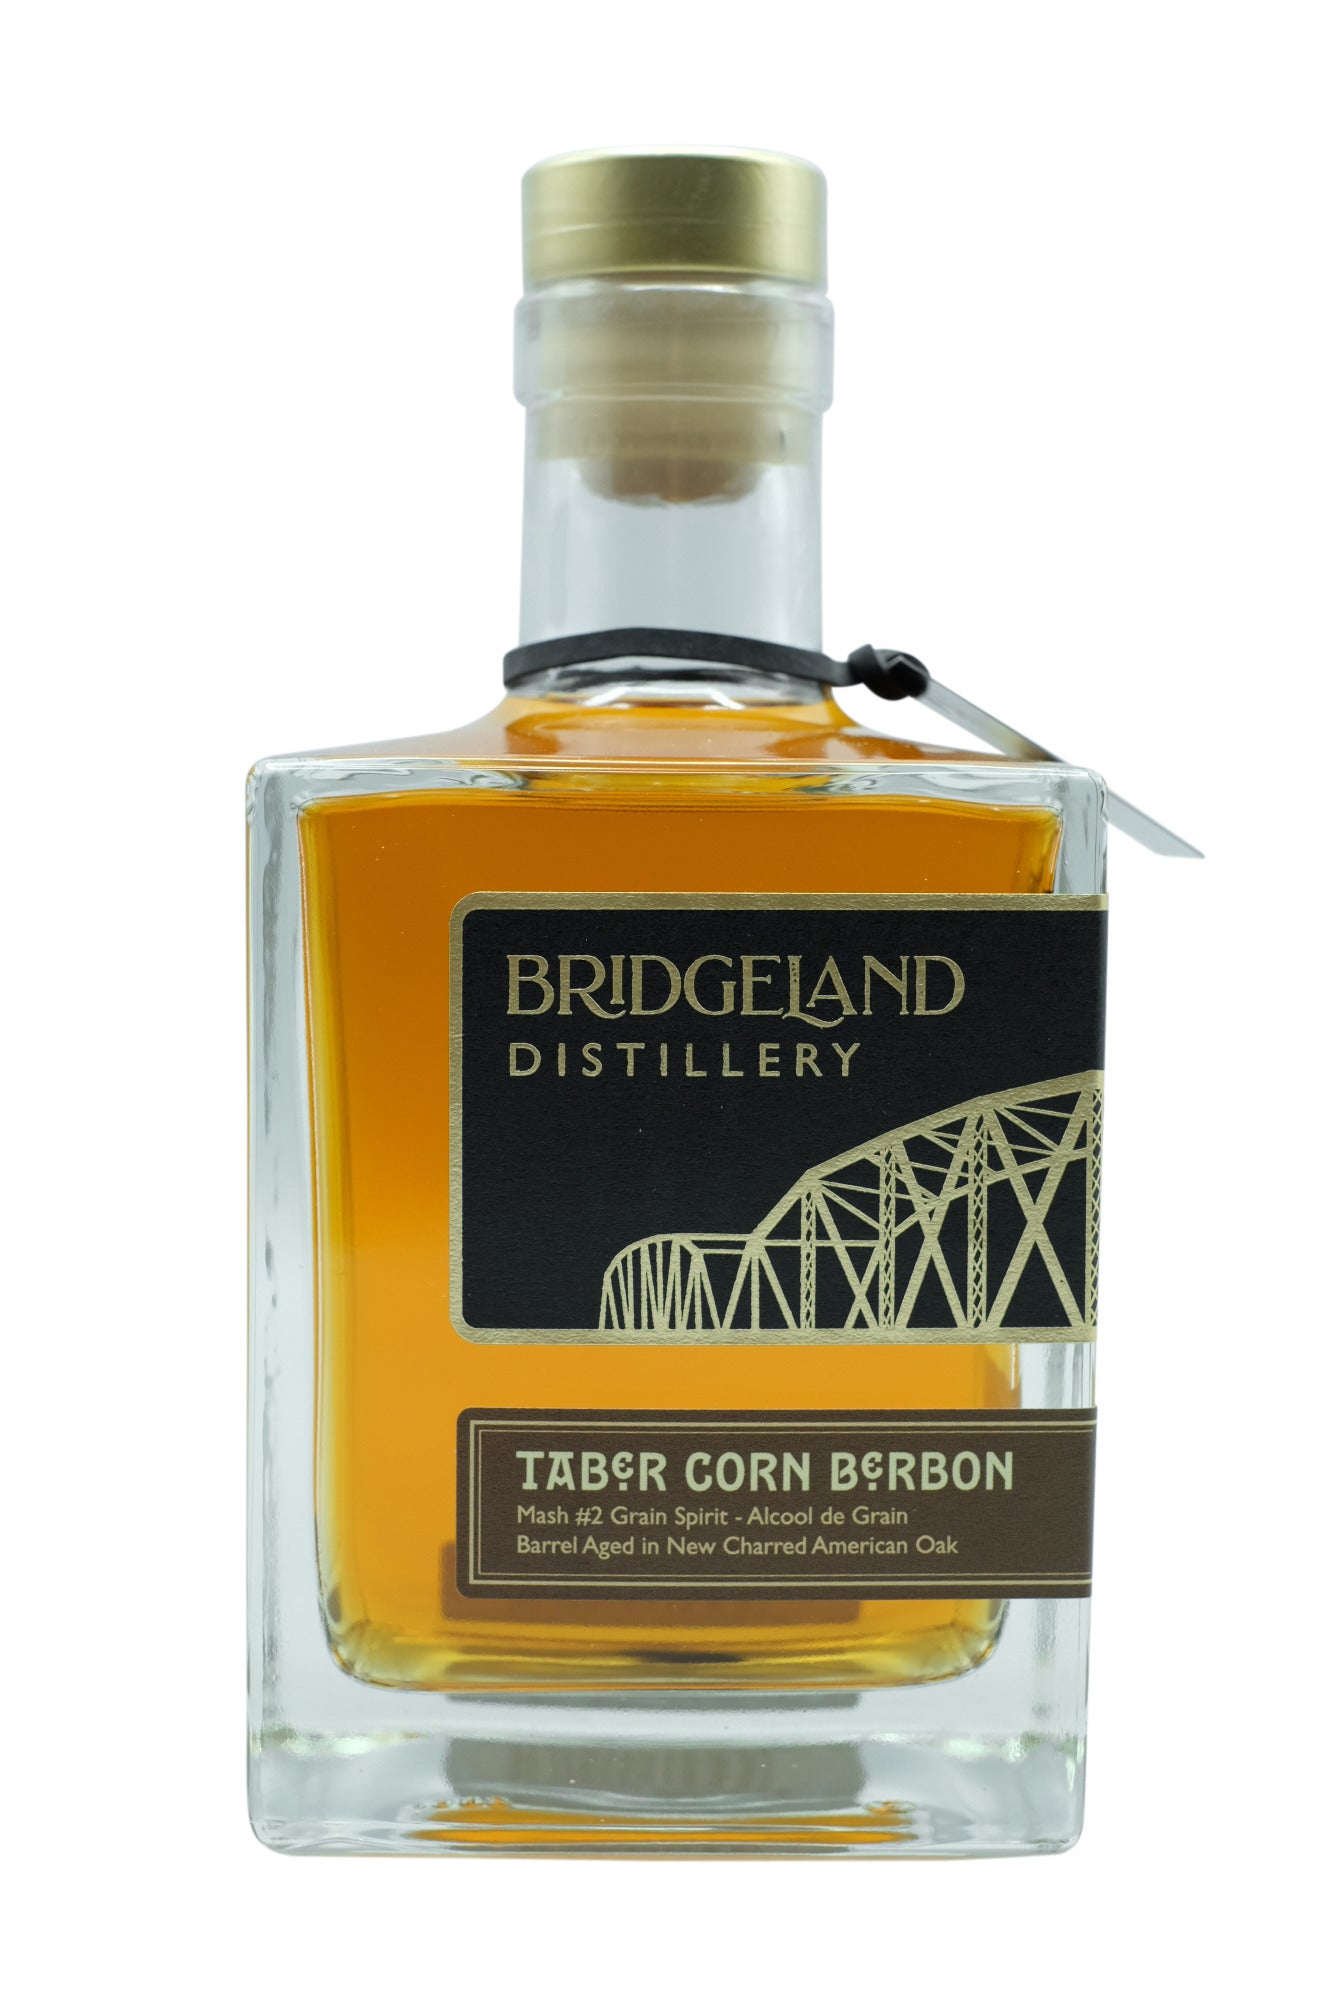 Bridgeland Distillery Taber Berbon